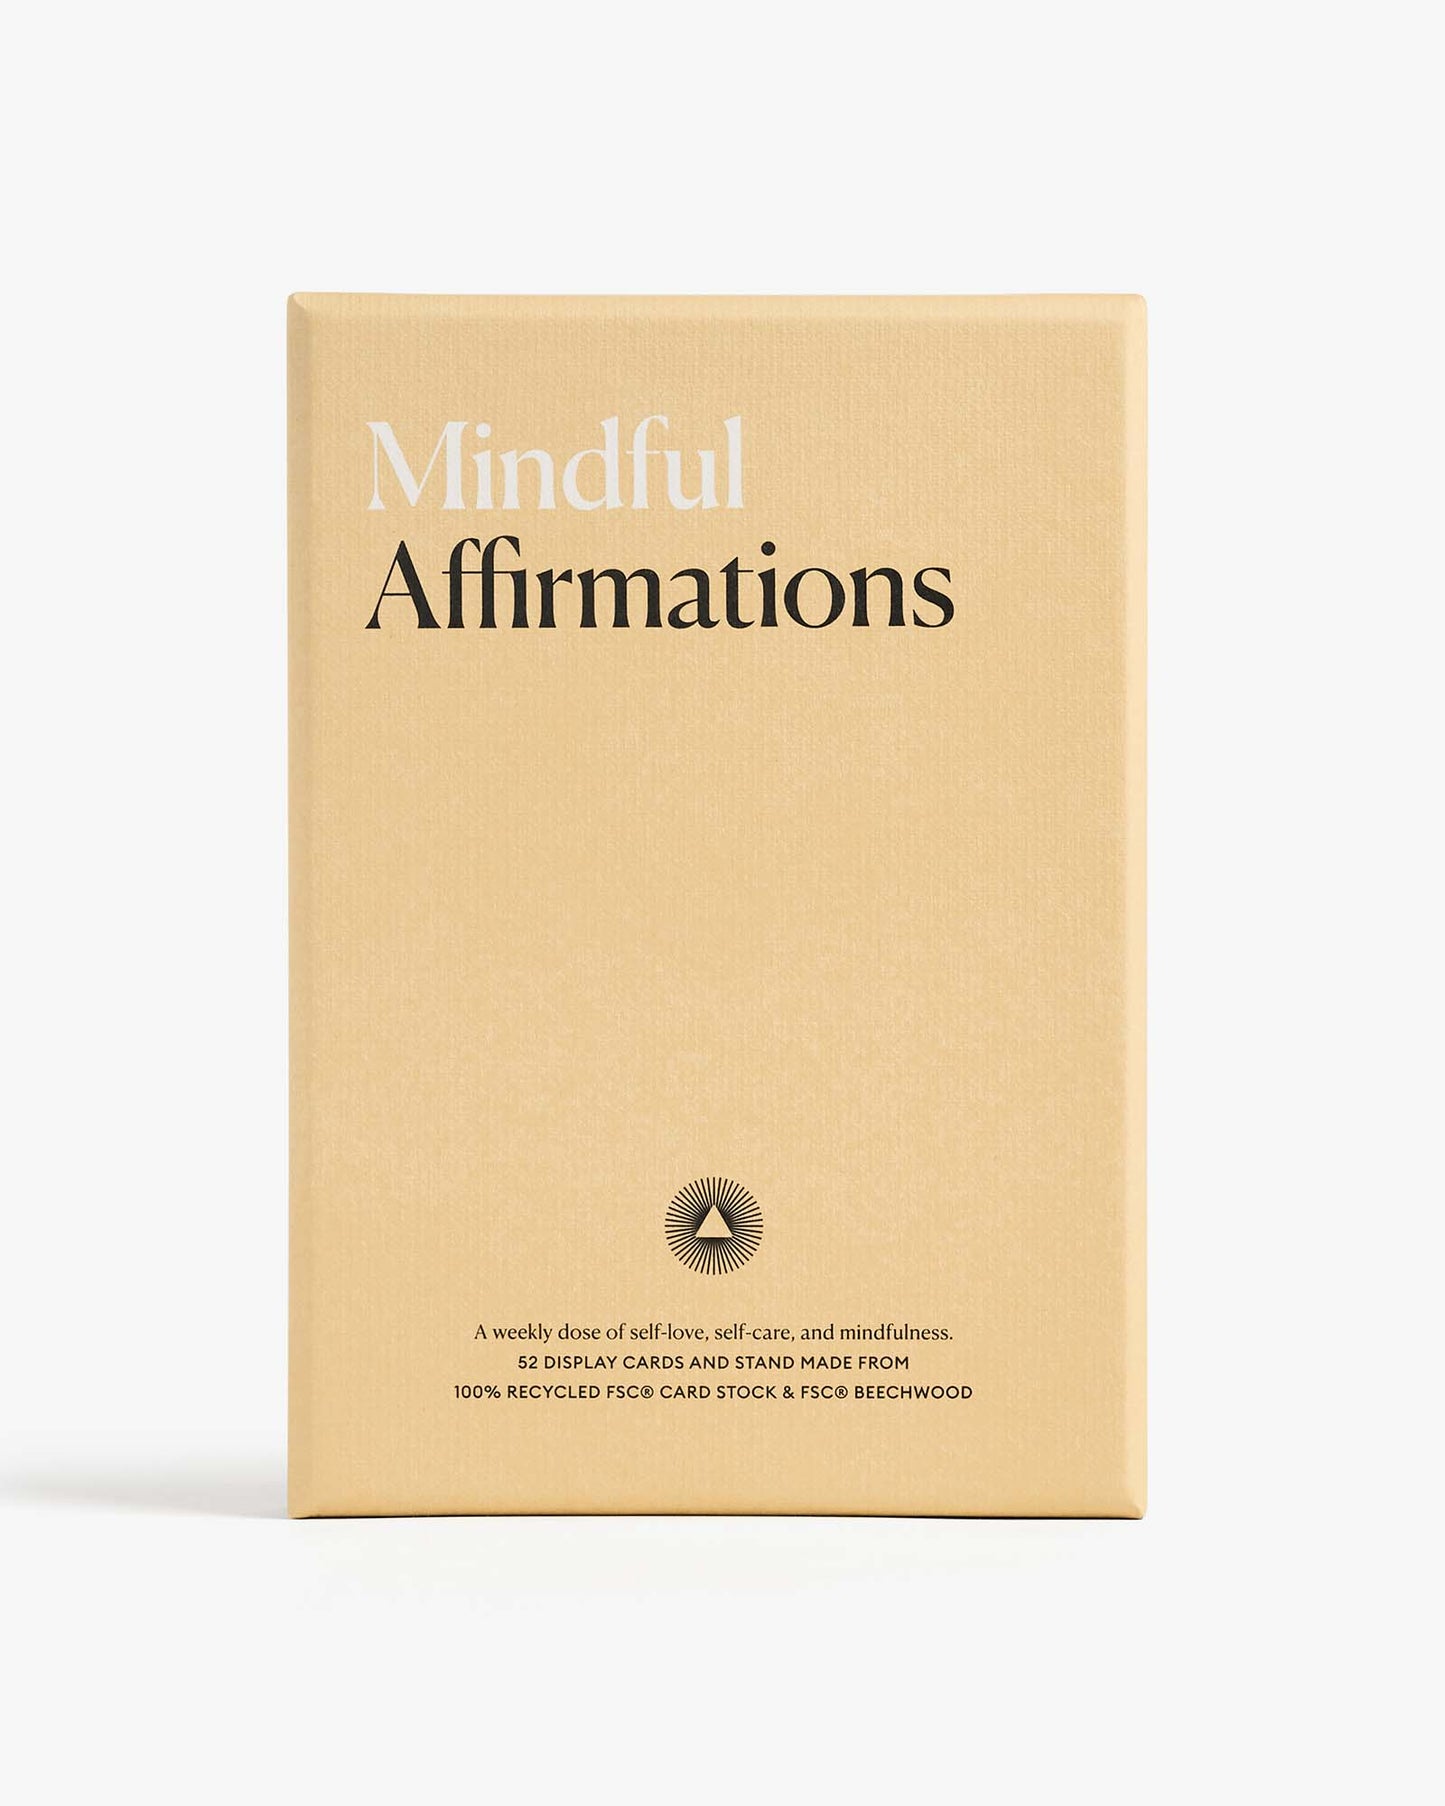 Mindful Affirmations - Original by Intelligent Change